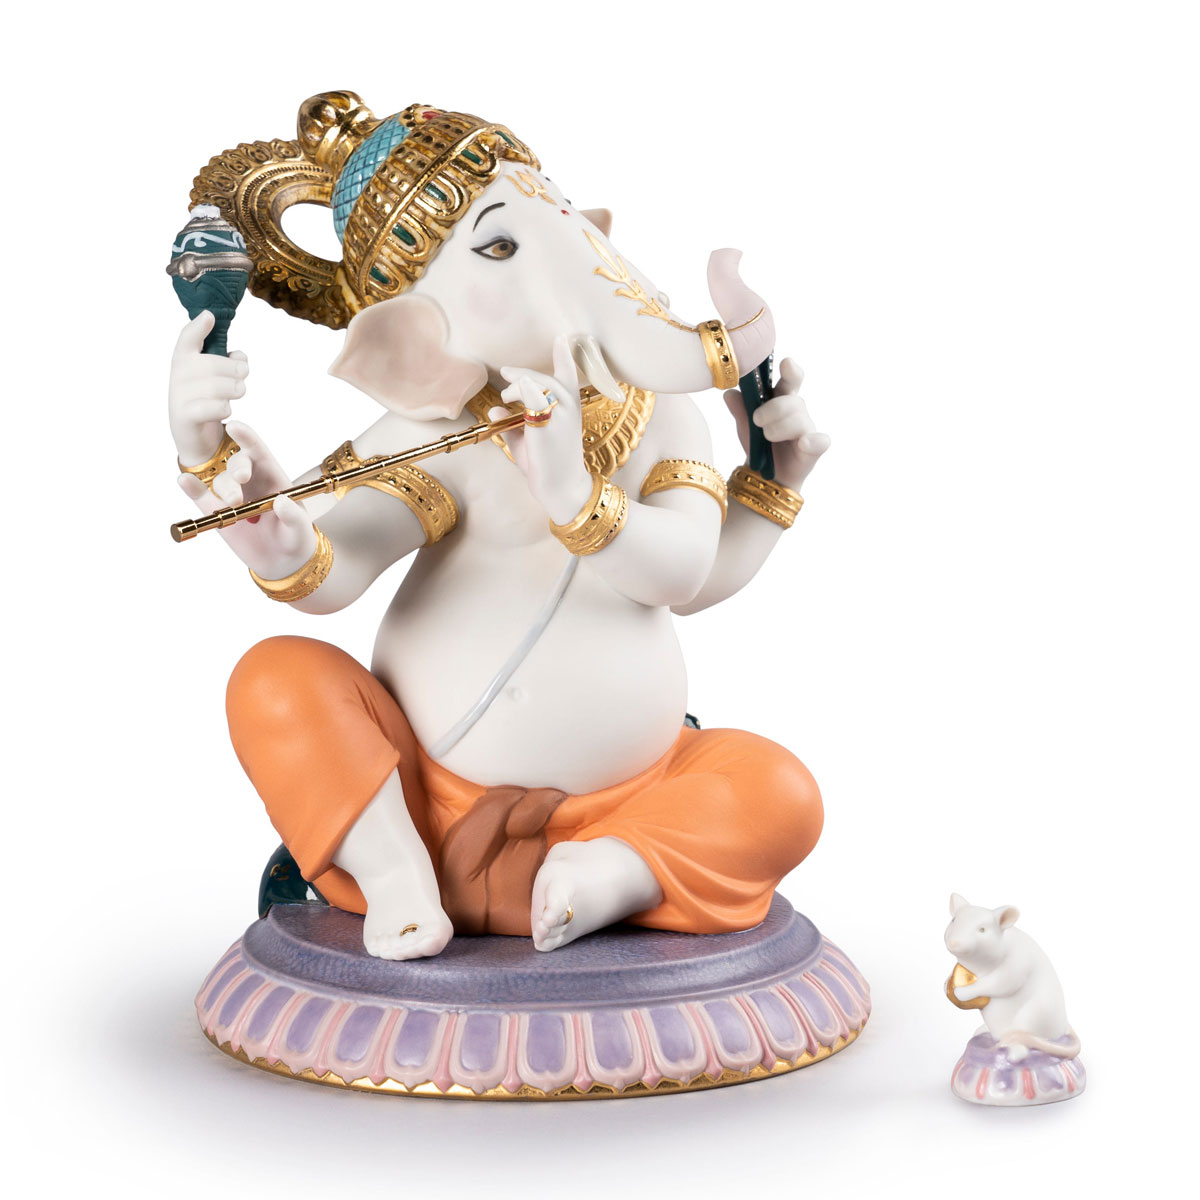 Lladro Classic Sculpture, Bansuri Ganesha Figurine. Limited Edition